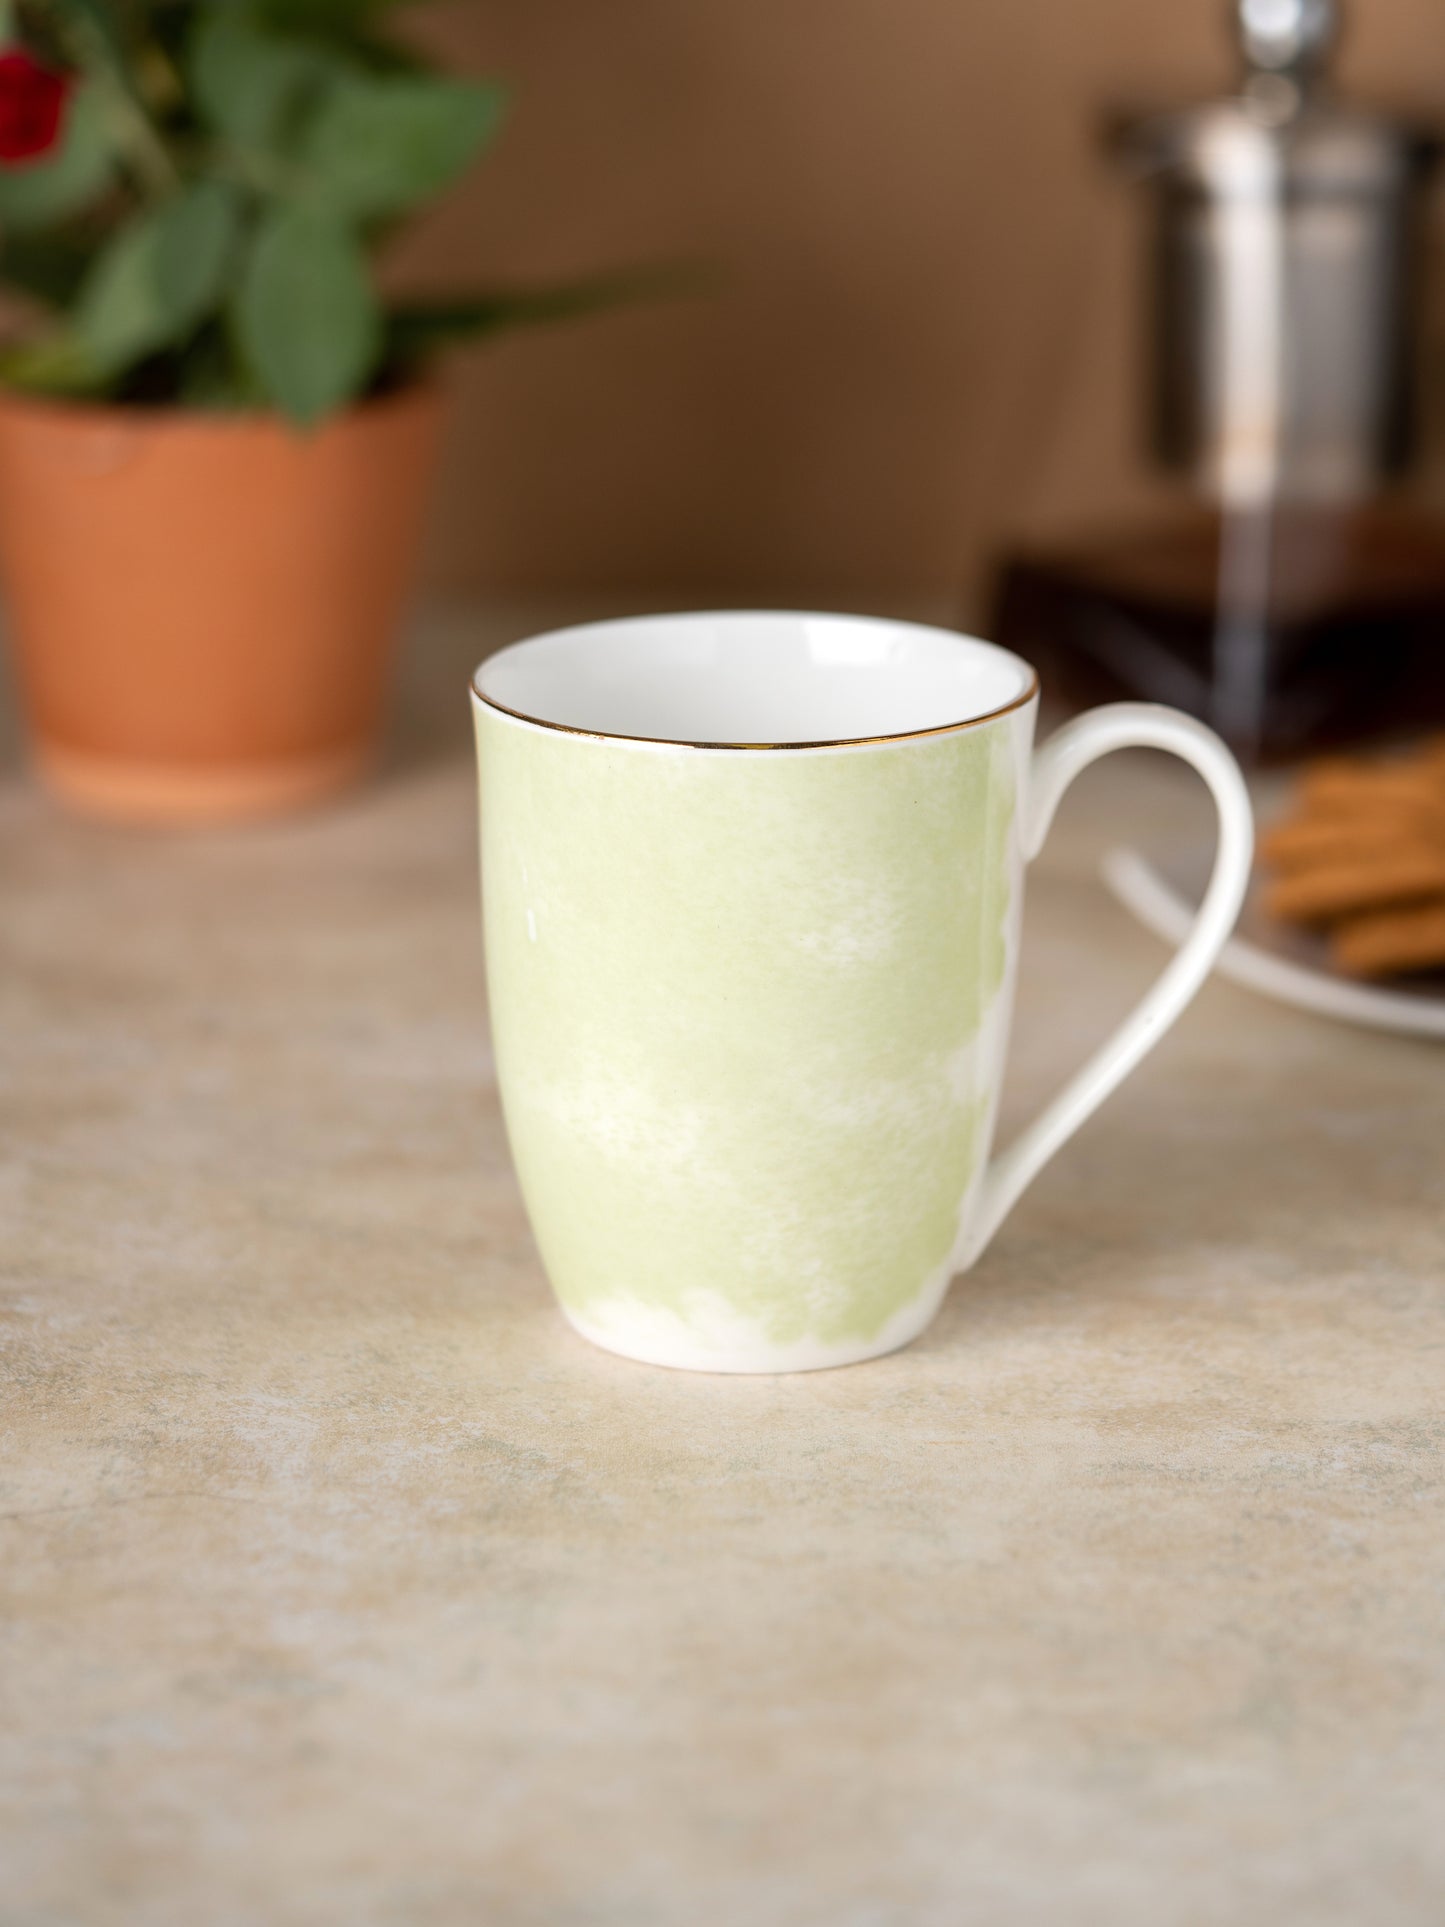 Oxford Paradise Coffee & Milk Mug, 320ml, Set of 4, P504